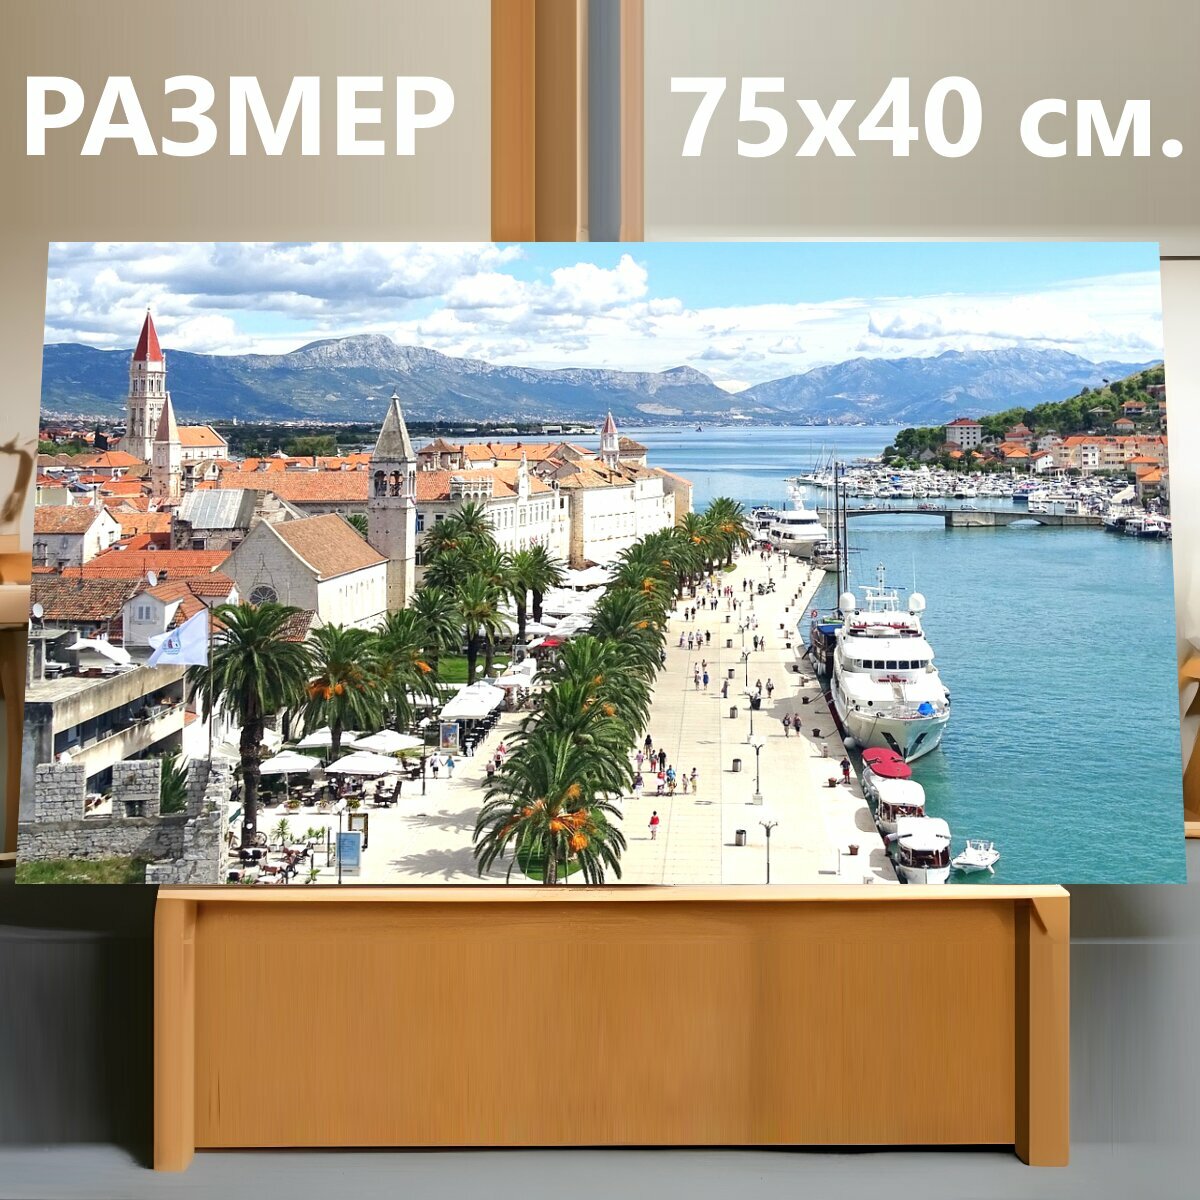 Картина на холсте "Город, море, архитектура" на подрамнике 75х40 см. для интерьера